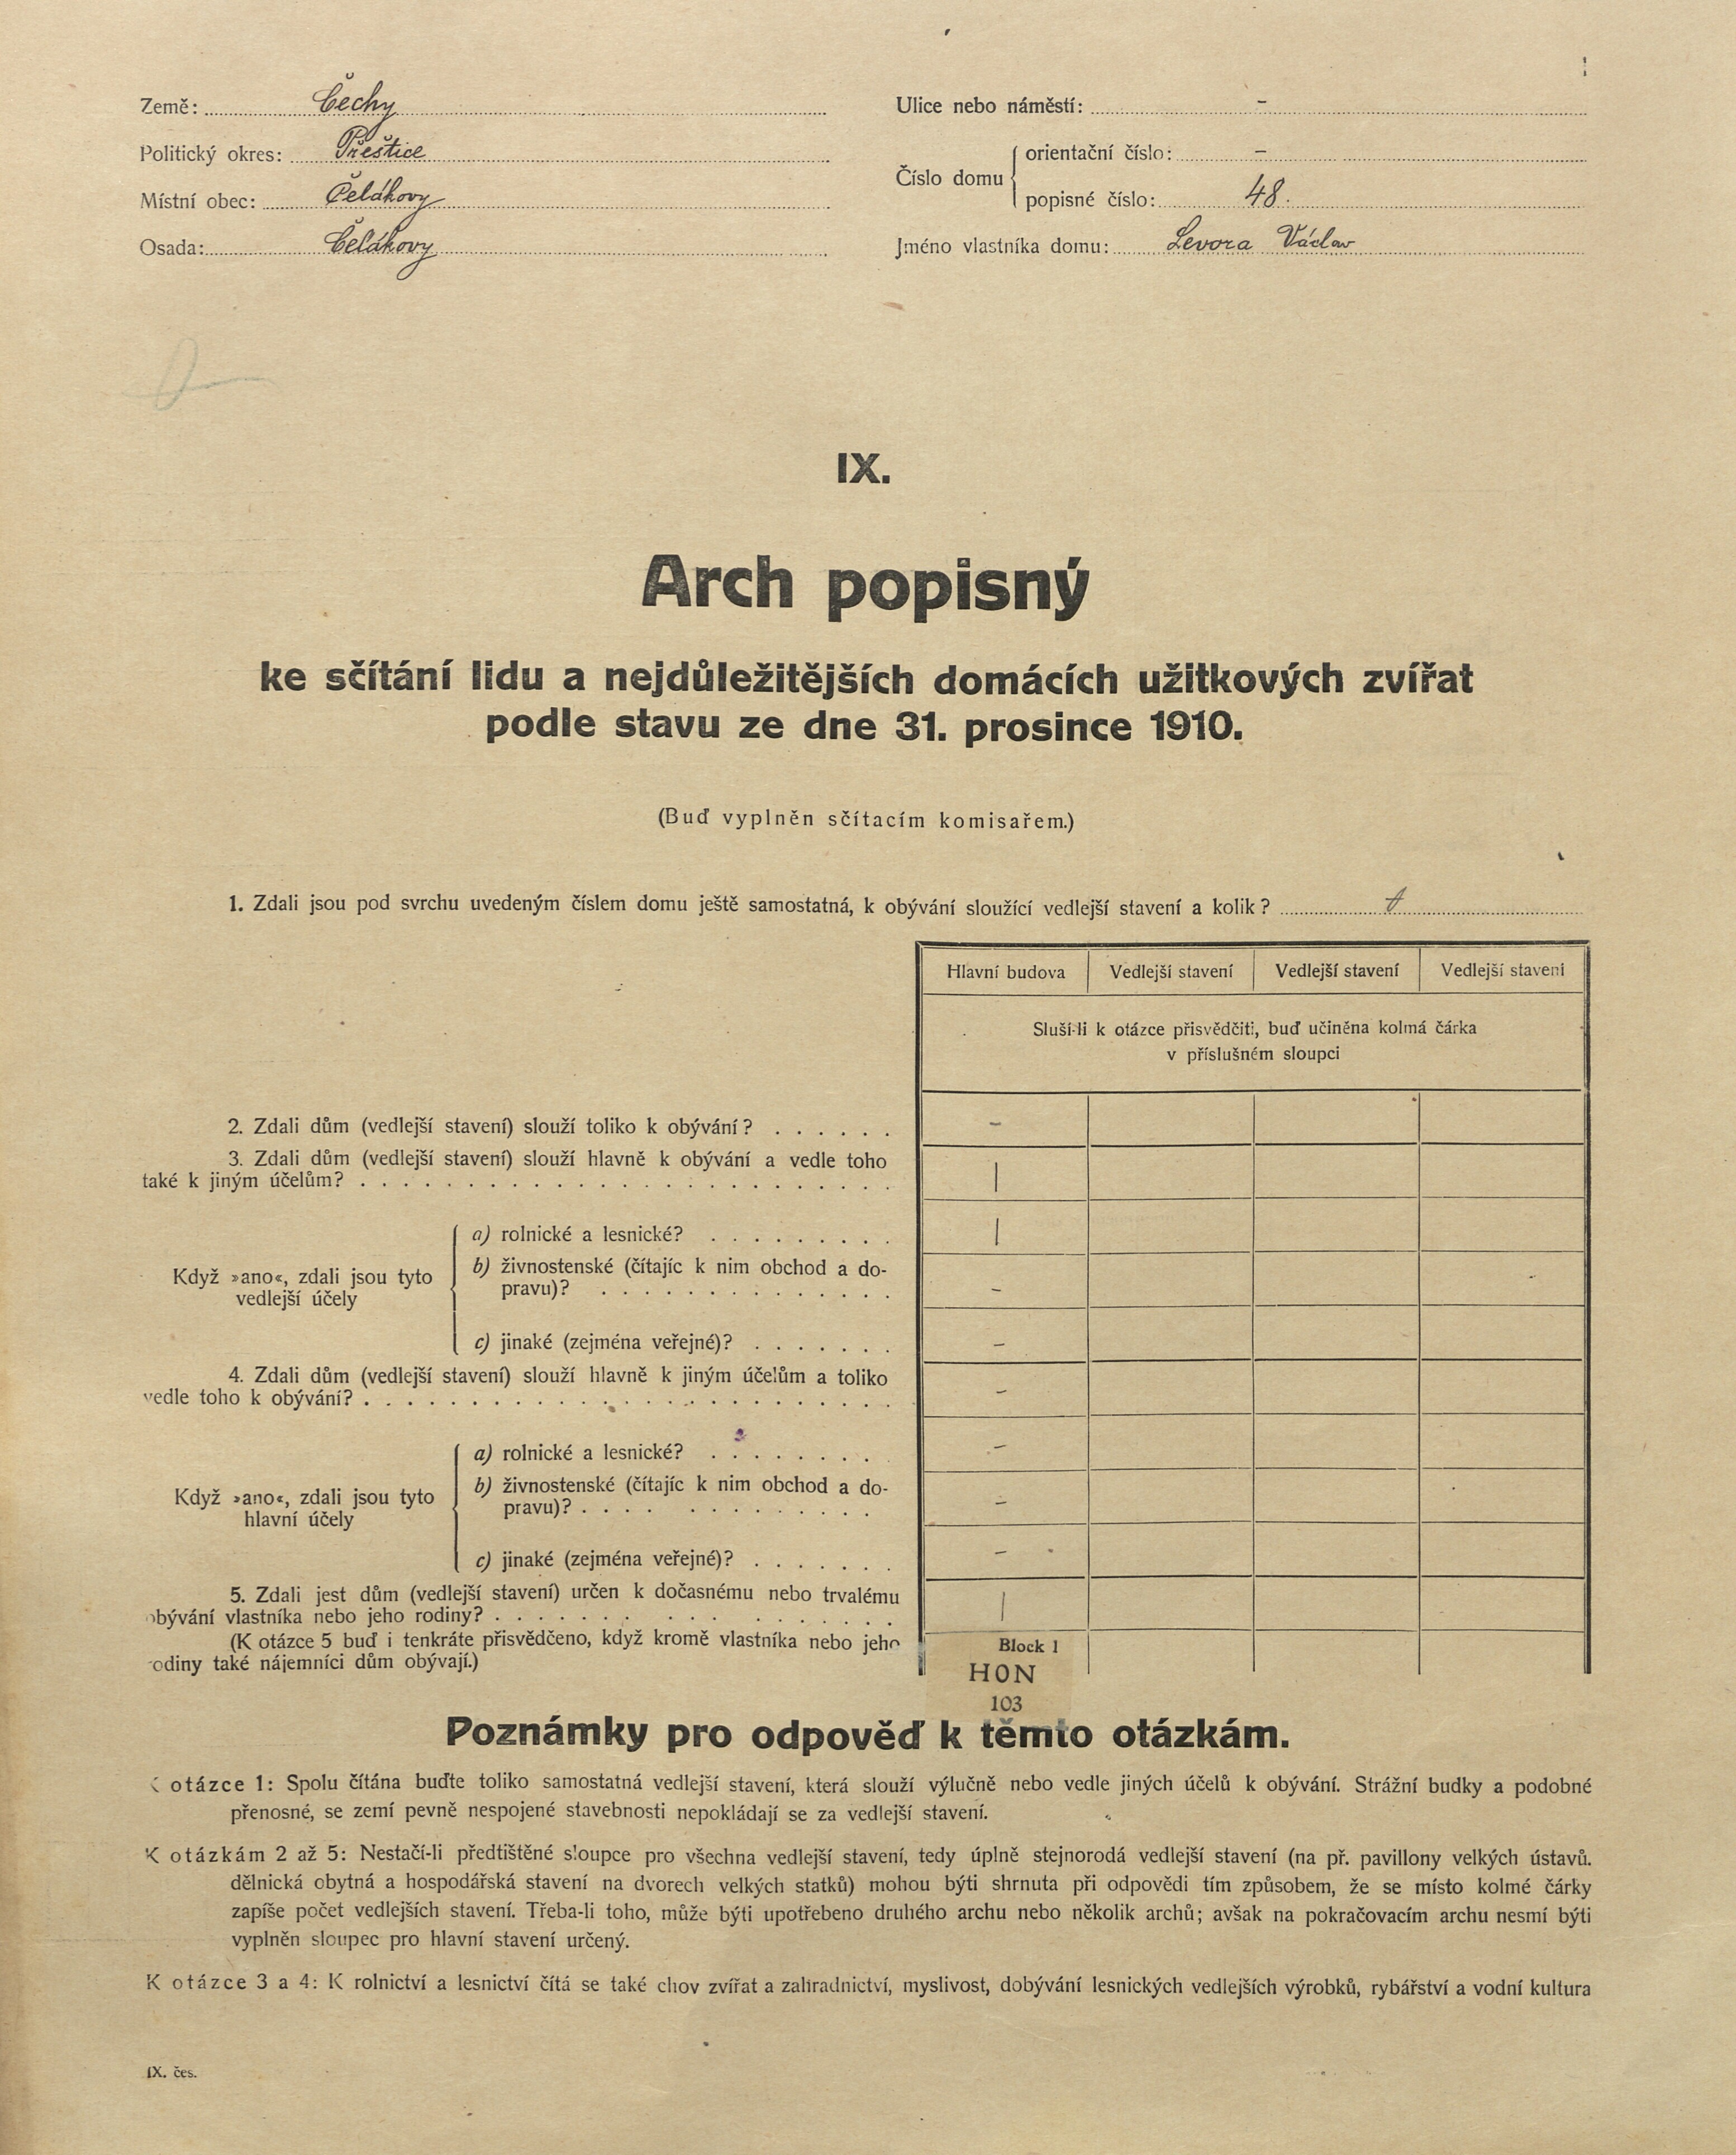 1. soap-pj_00302_census-1910-celakovy-cp048_0010